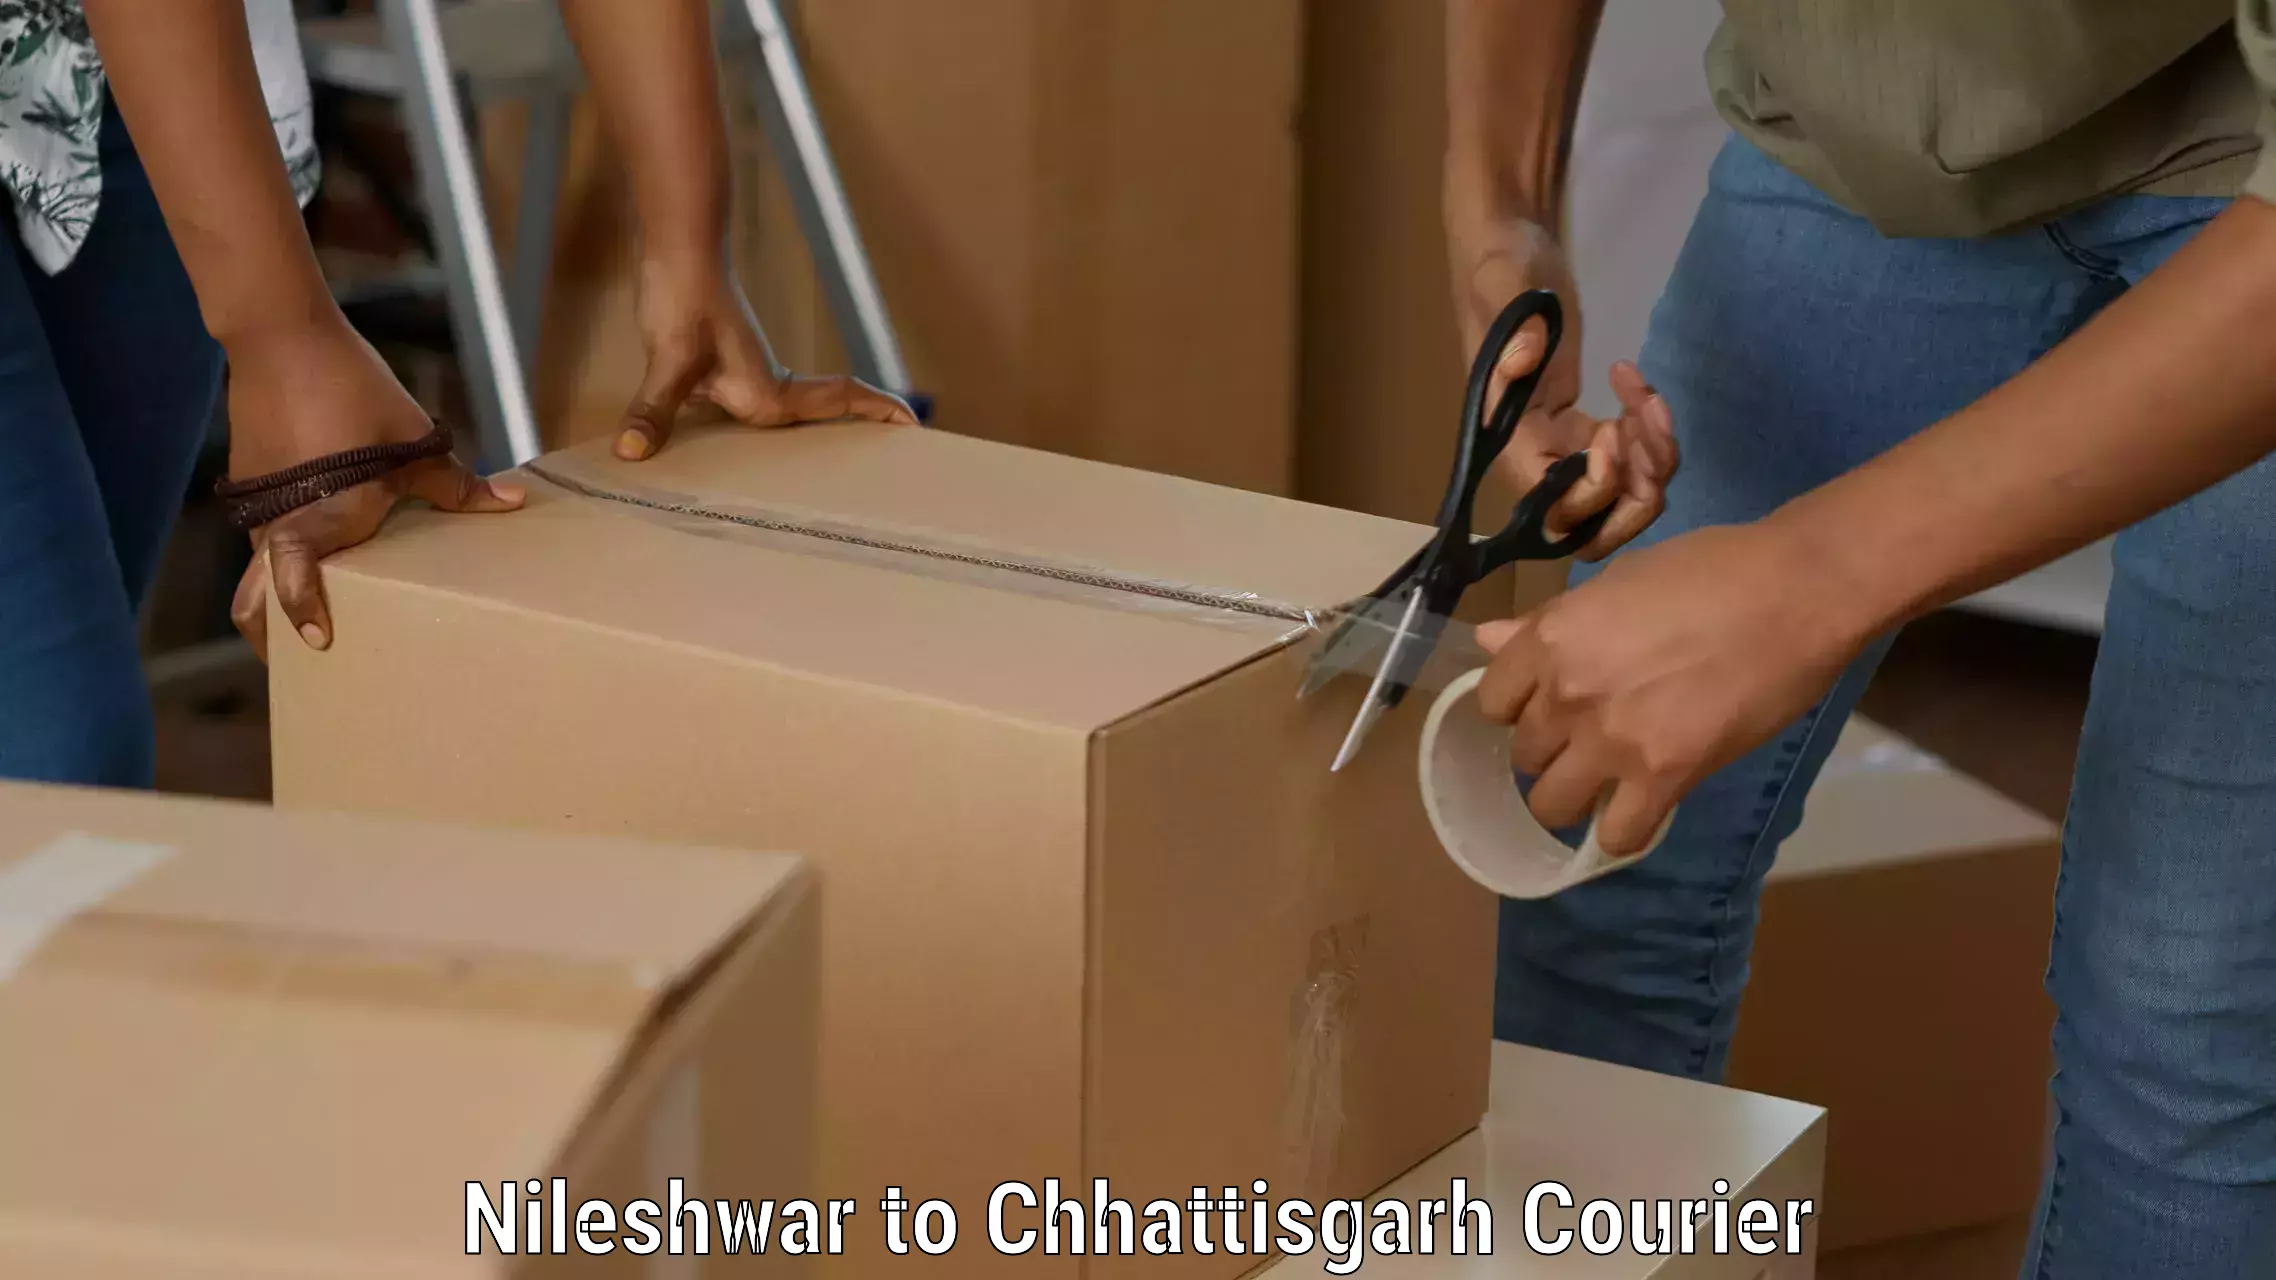 State-of-the-art courier technology Nileshwar to Bijapur Chhattisgarh